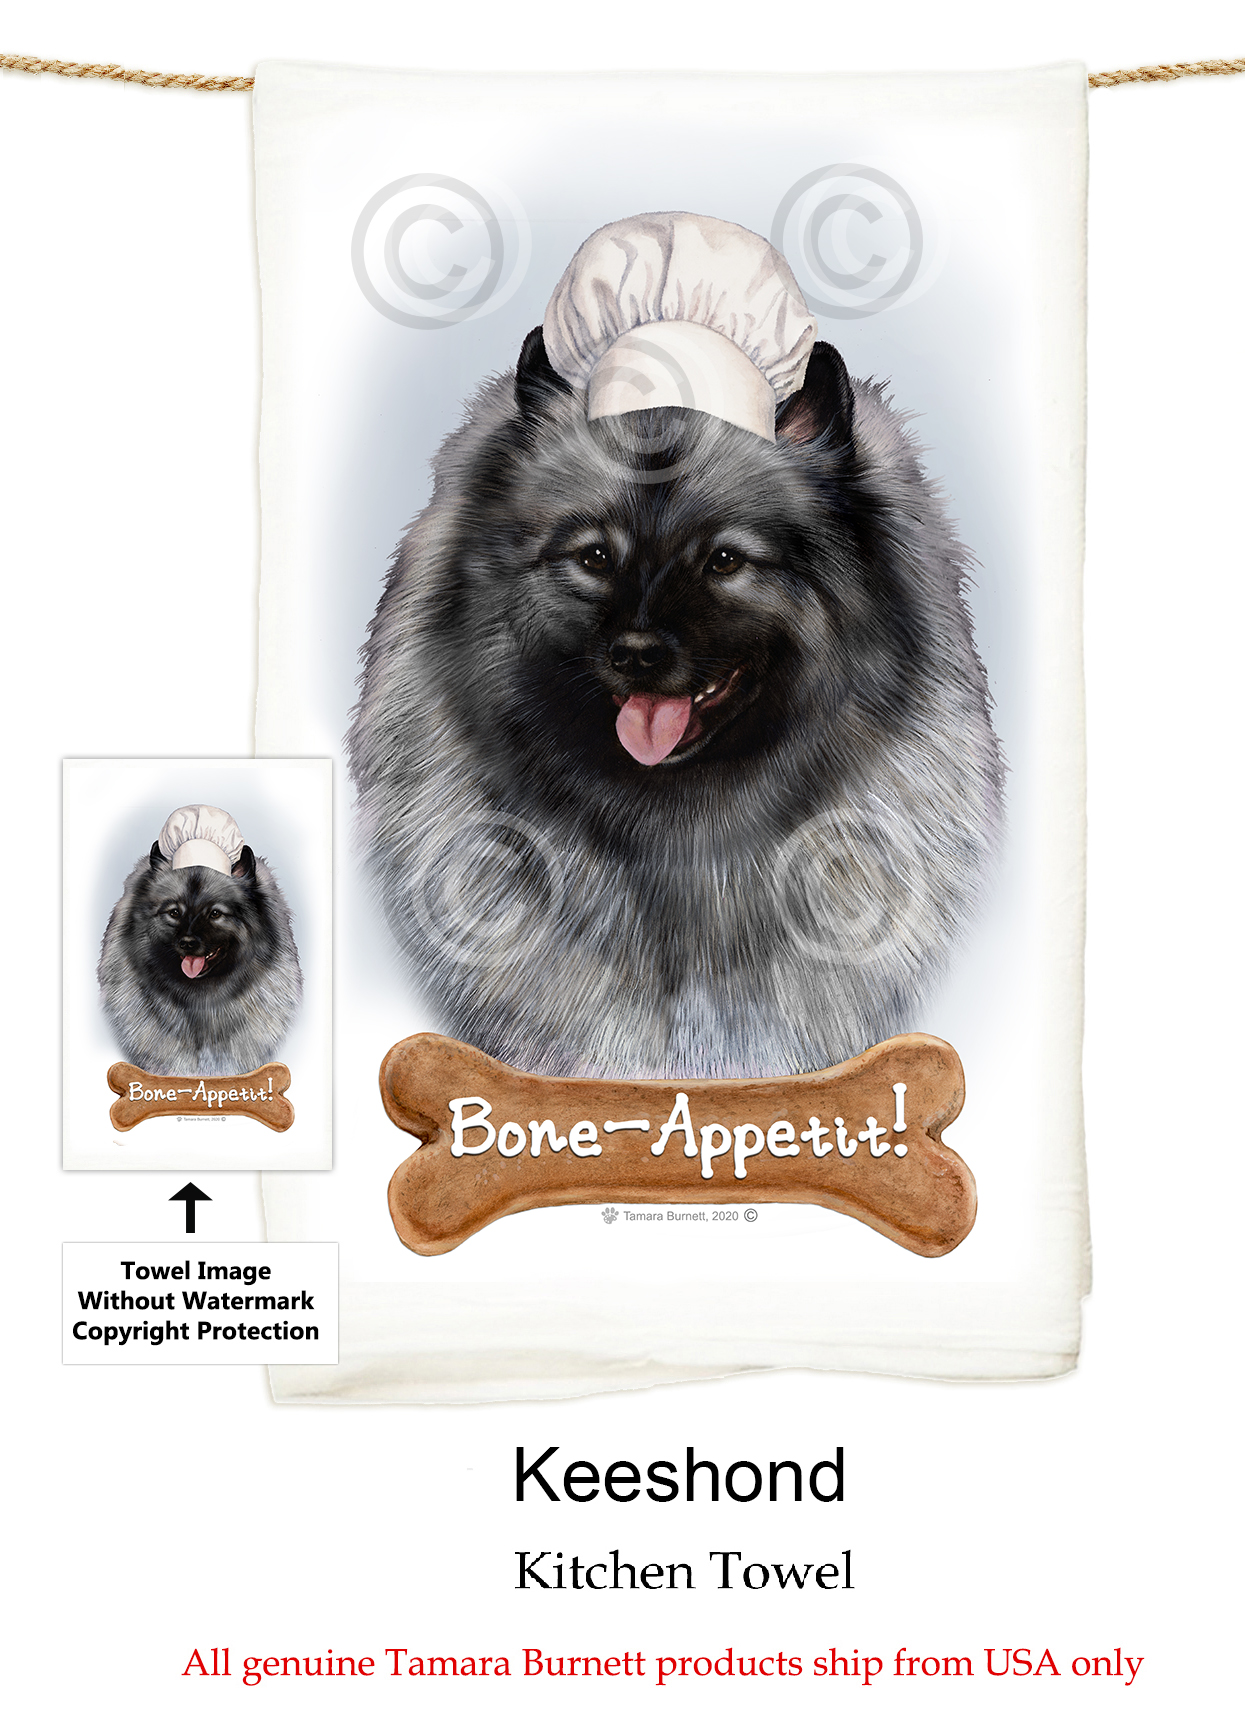 Keeshond - Flour Sack Towel image sized 1245 x 1717